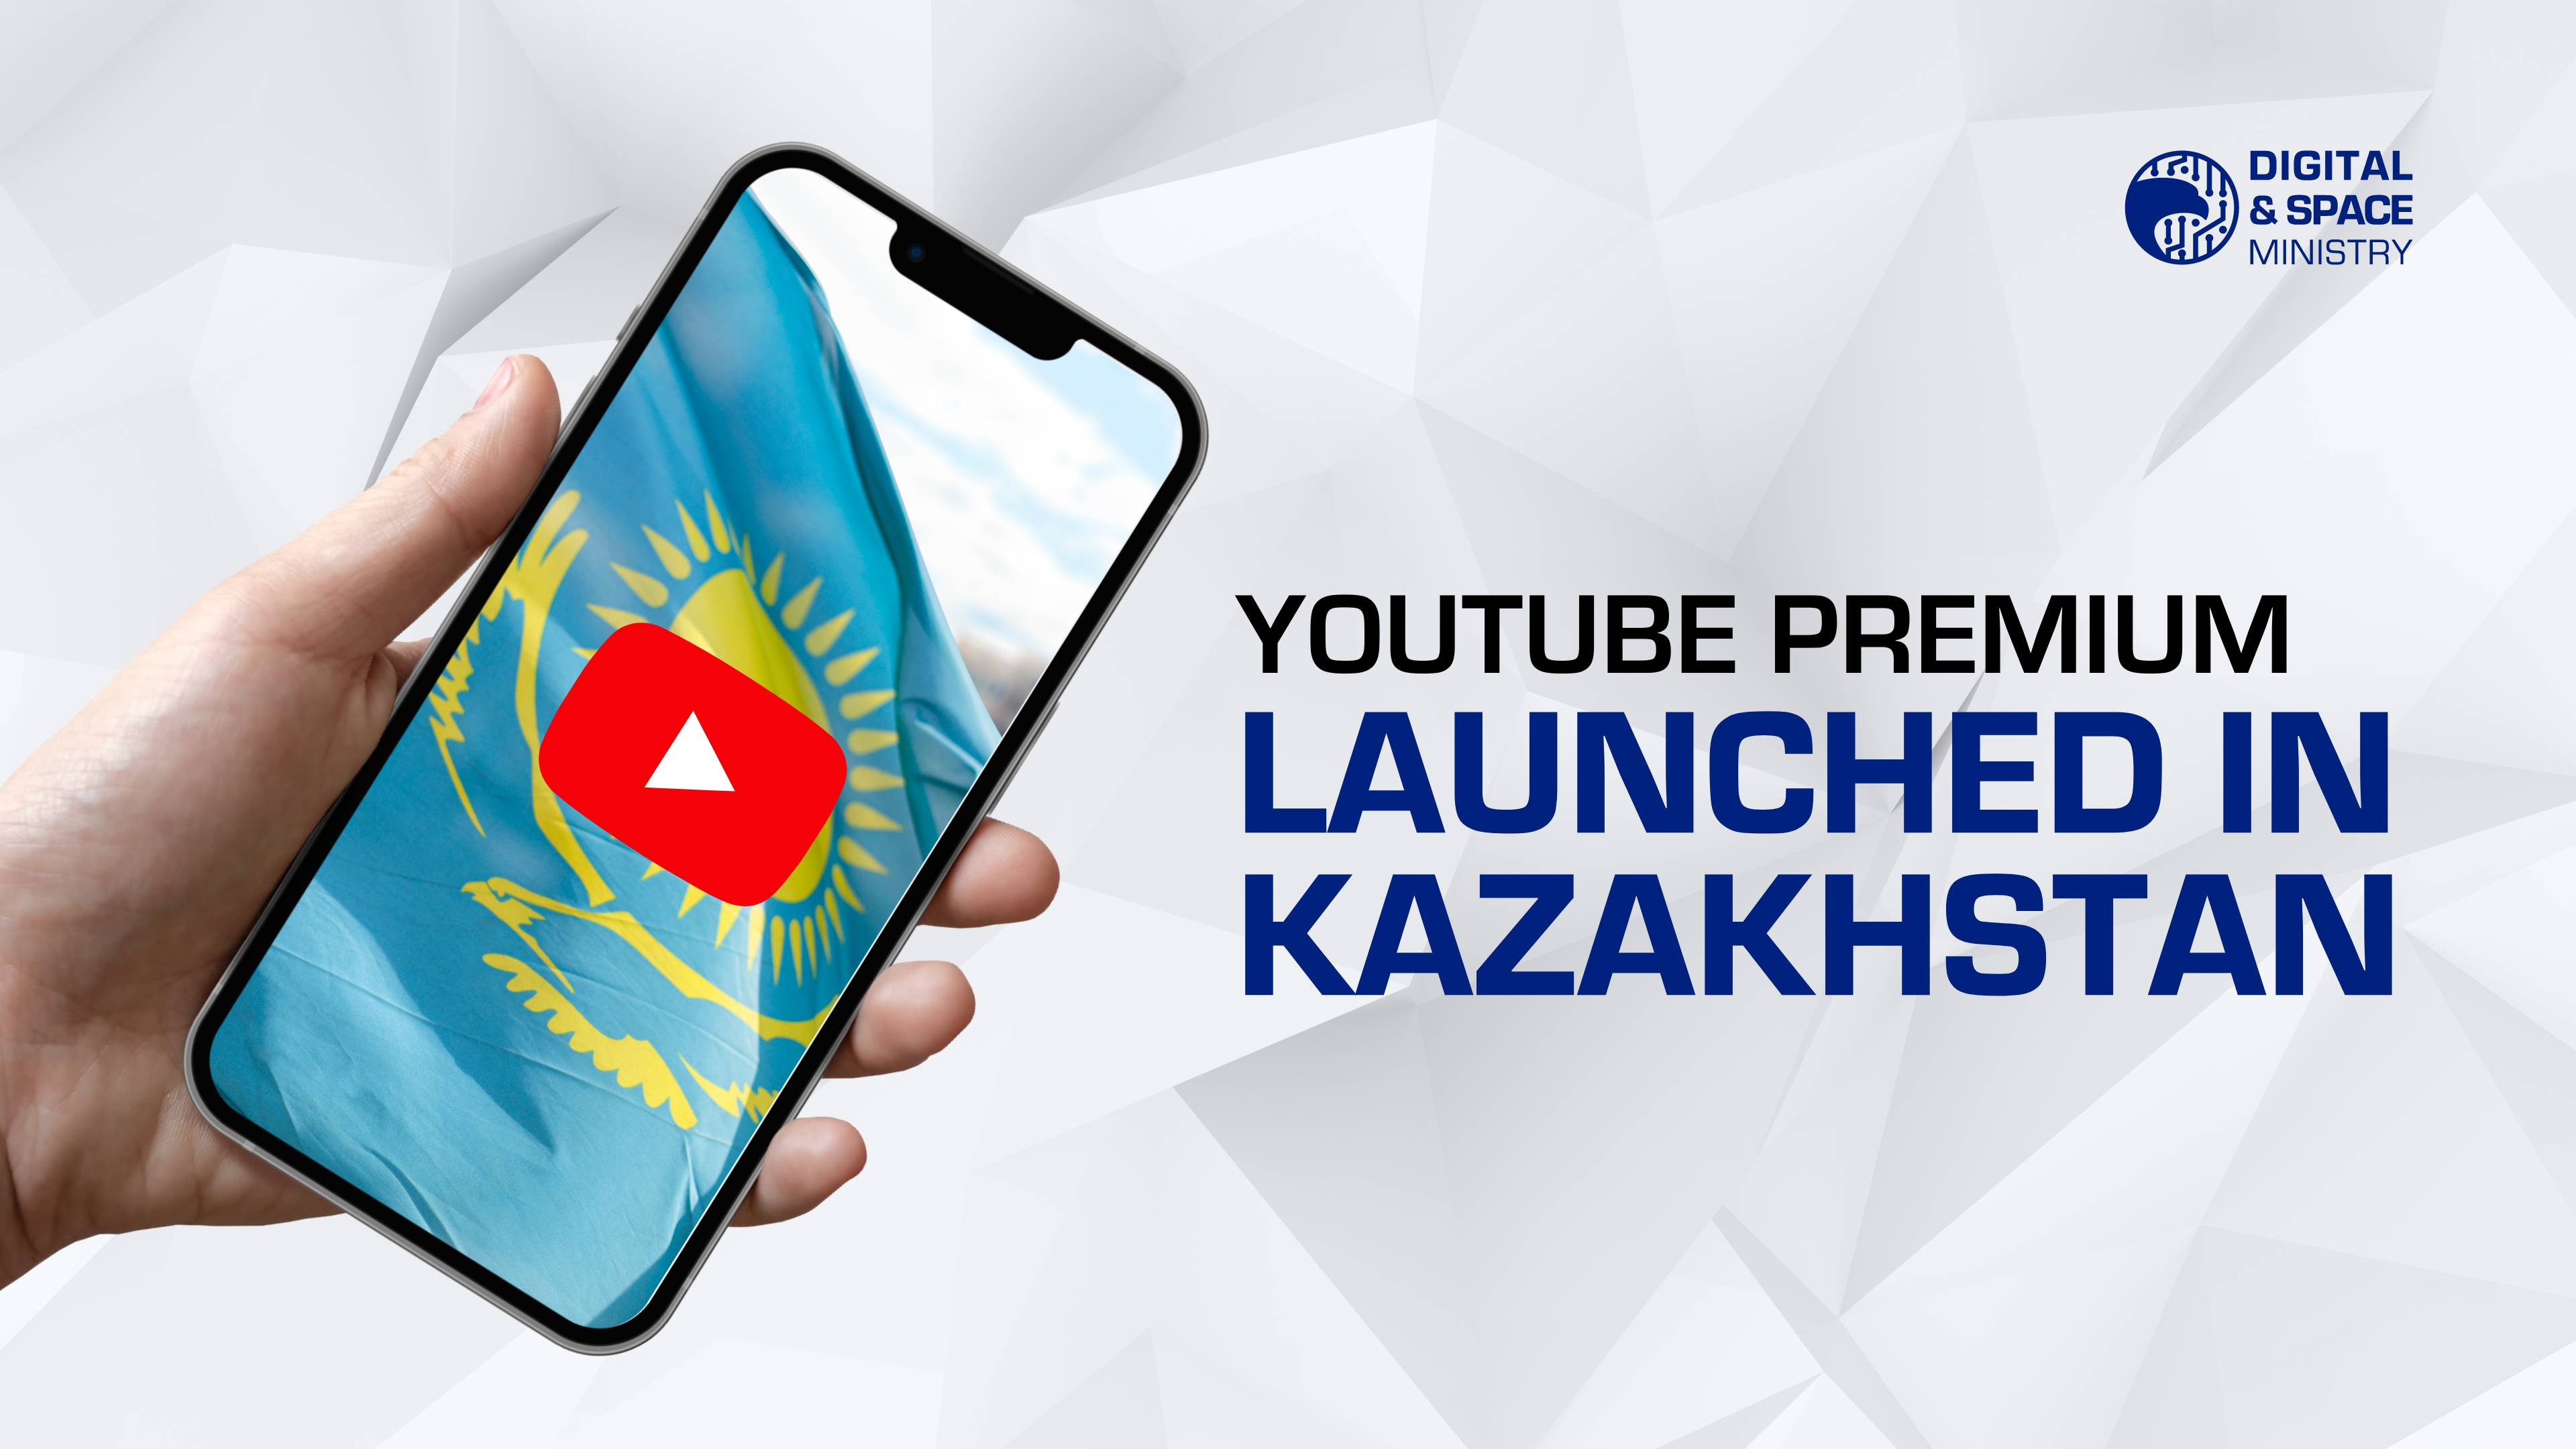 YouTube Premium launched in Kazakhstan